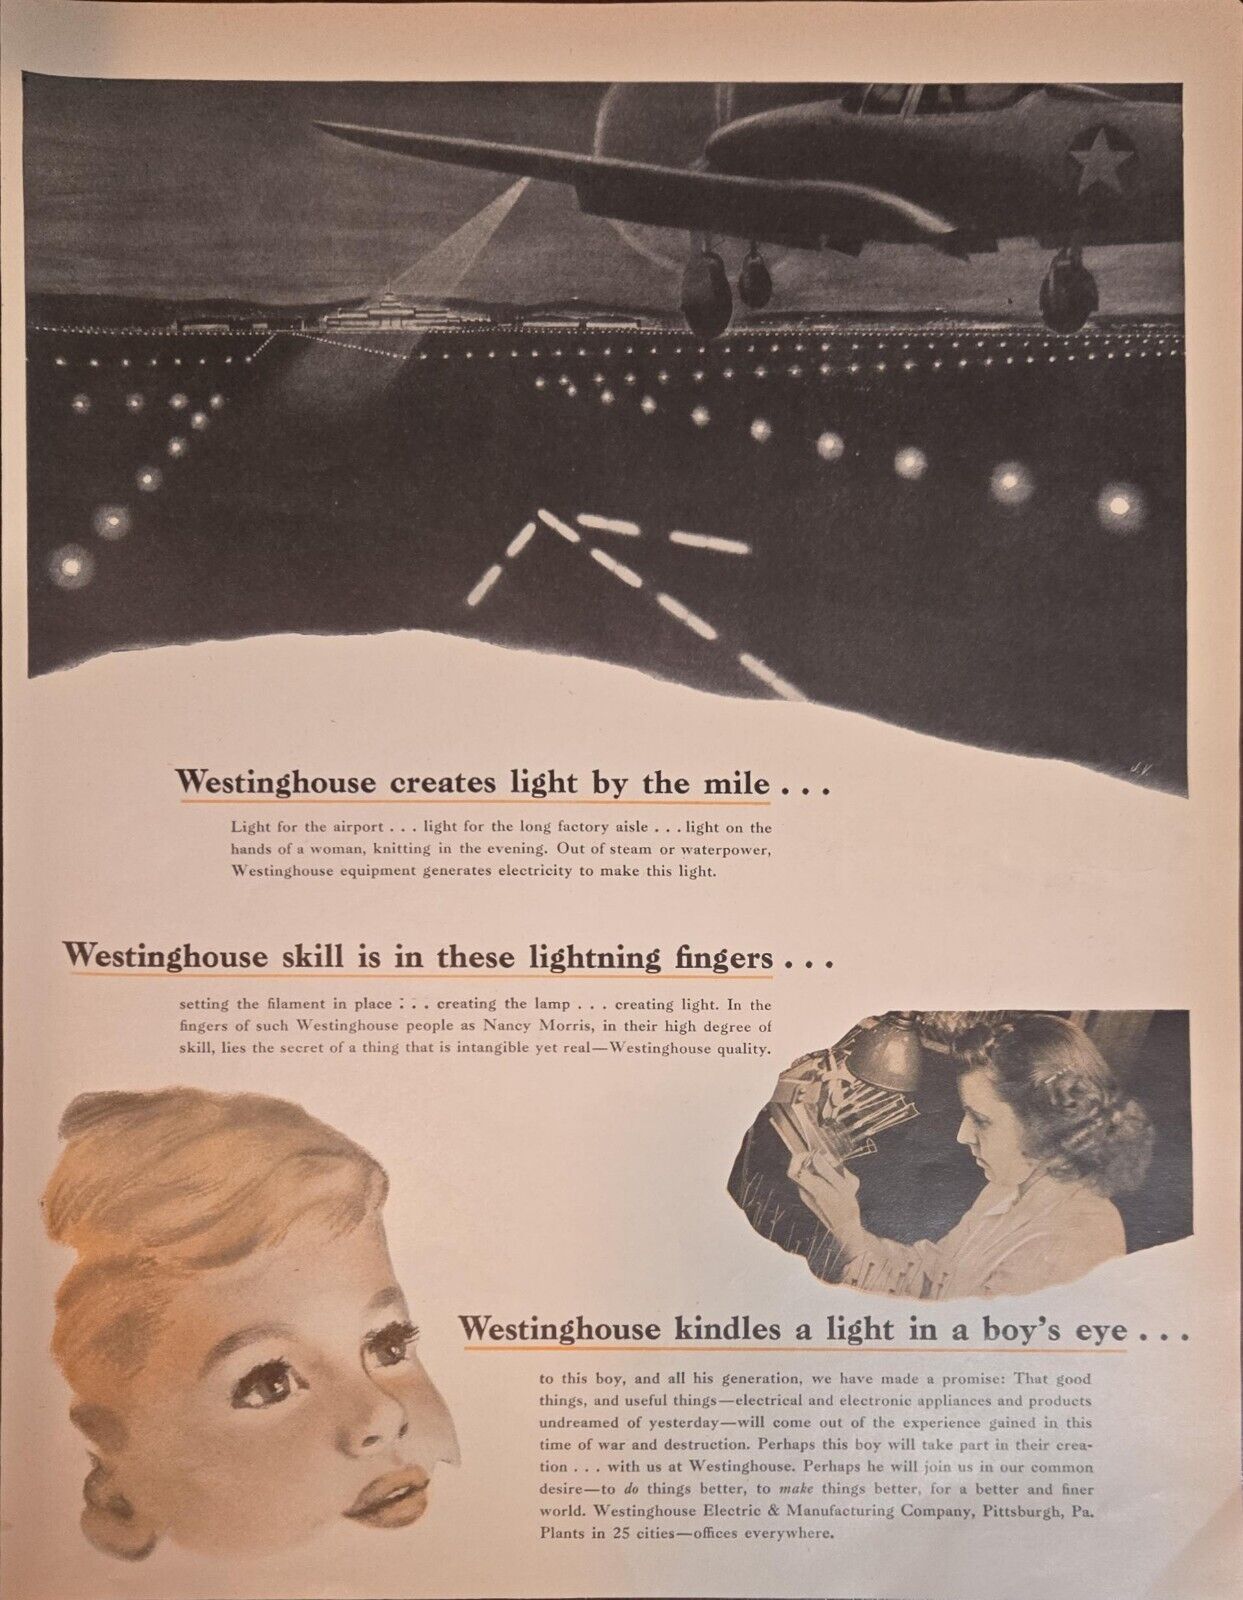 1943 Westinghouse Ad War Time Light Theme Airport + Bulb Construction + Dreams